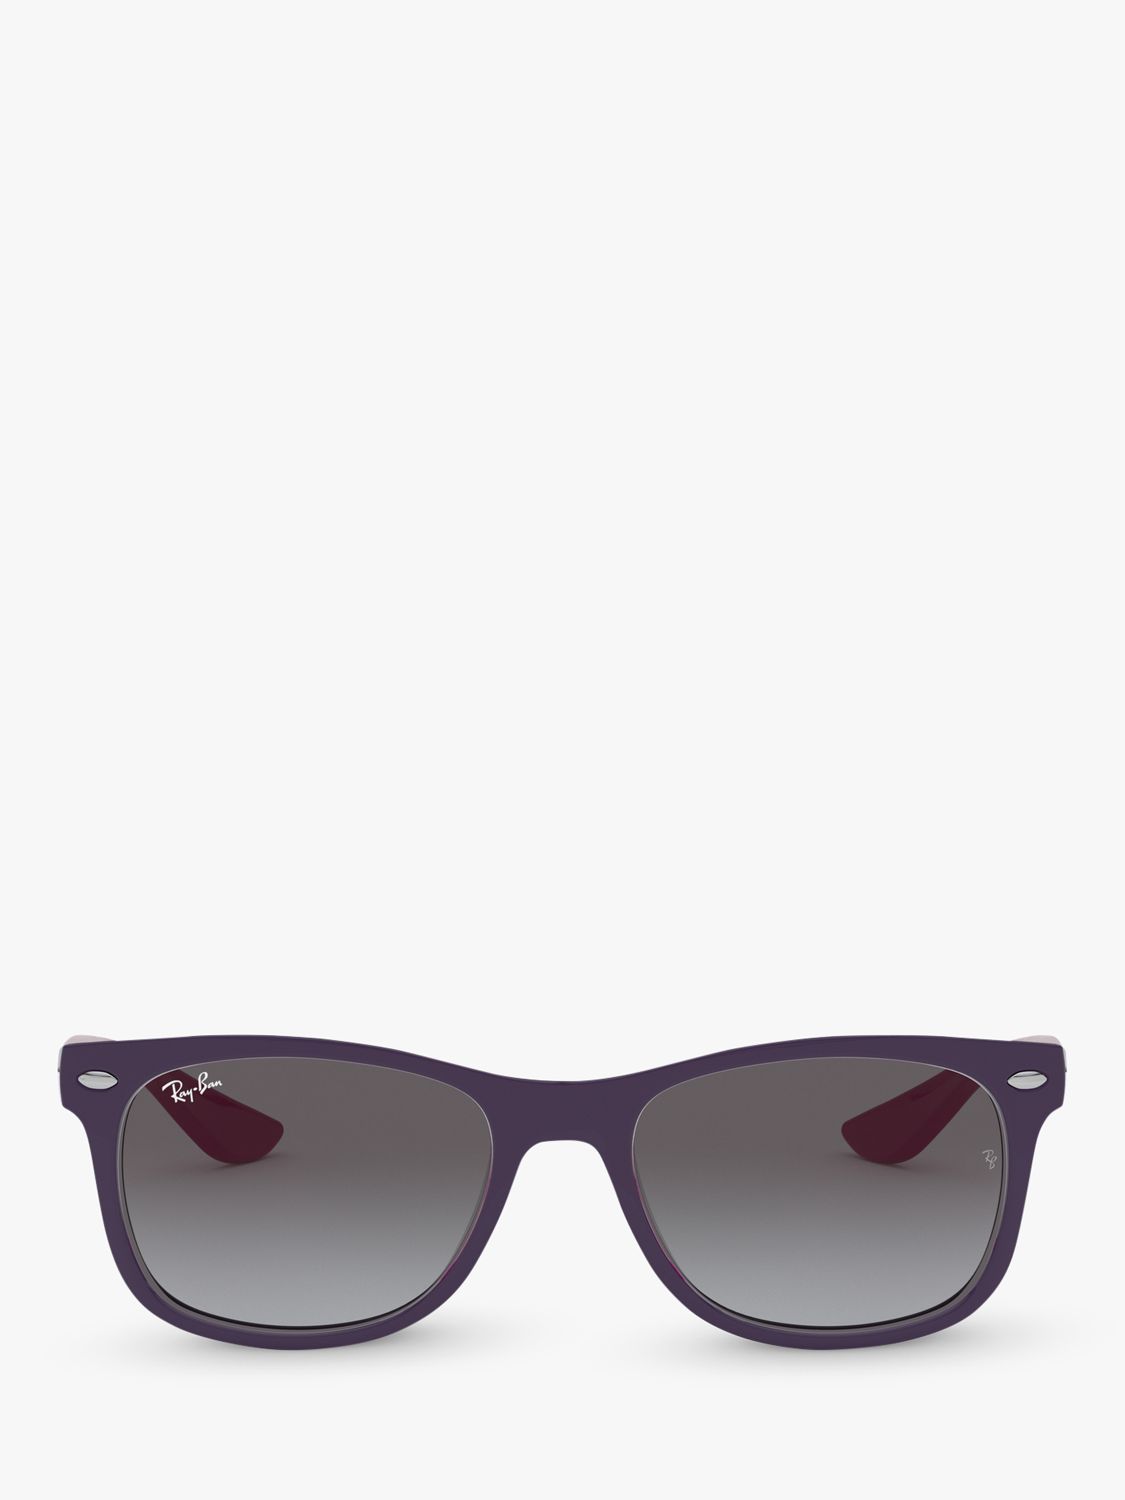 Ray-Ban Junior RJ9052S Unisex Wayfarer Sunglasses, Violet/Grey Gradient